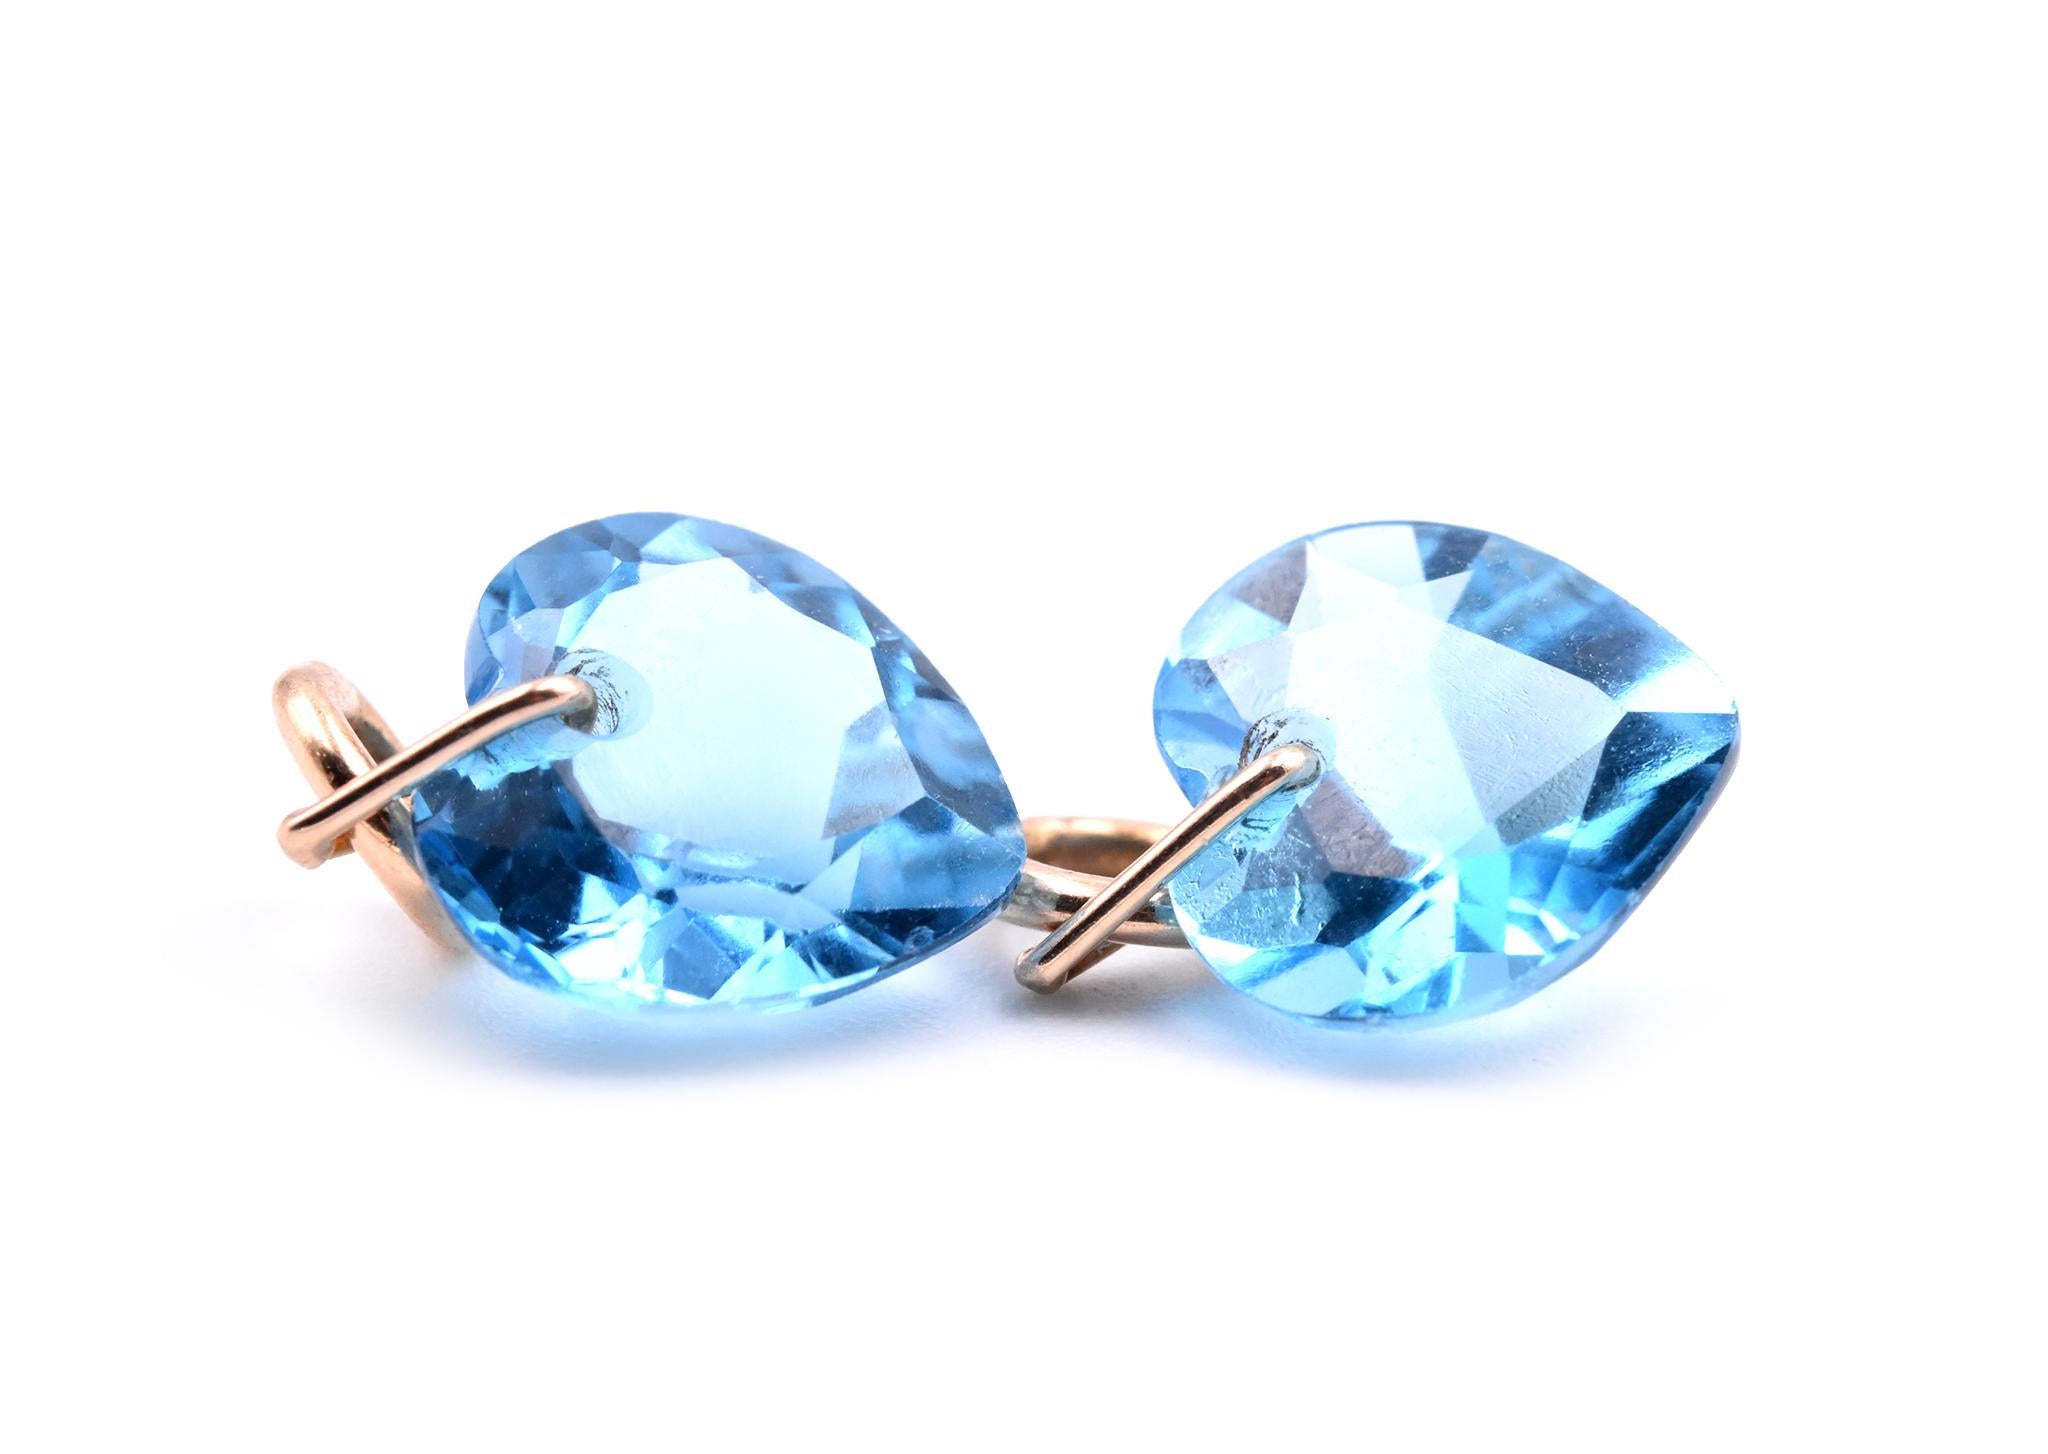 Designer: custom design
Material: 14k yellow gold
Topaz: 2 heart cut blue topaz
Dimensions: earring charms measure 10mm x 9.65mm
Fastenings: earring enhancers
Weight: 2.07 grams
